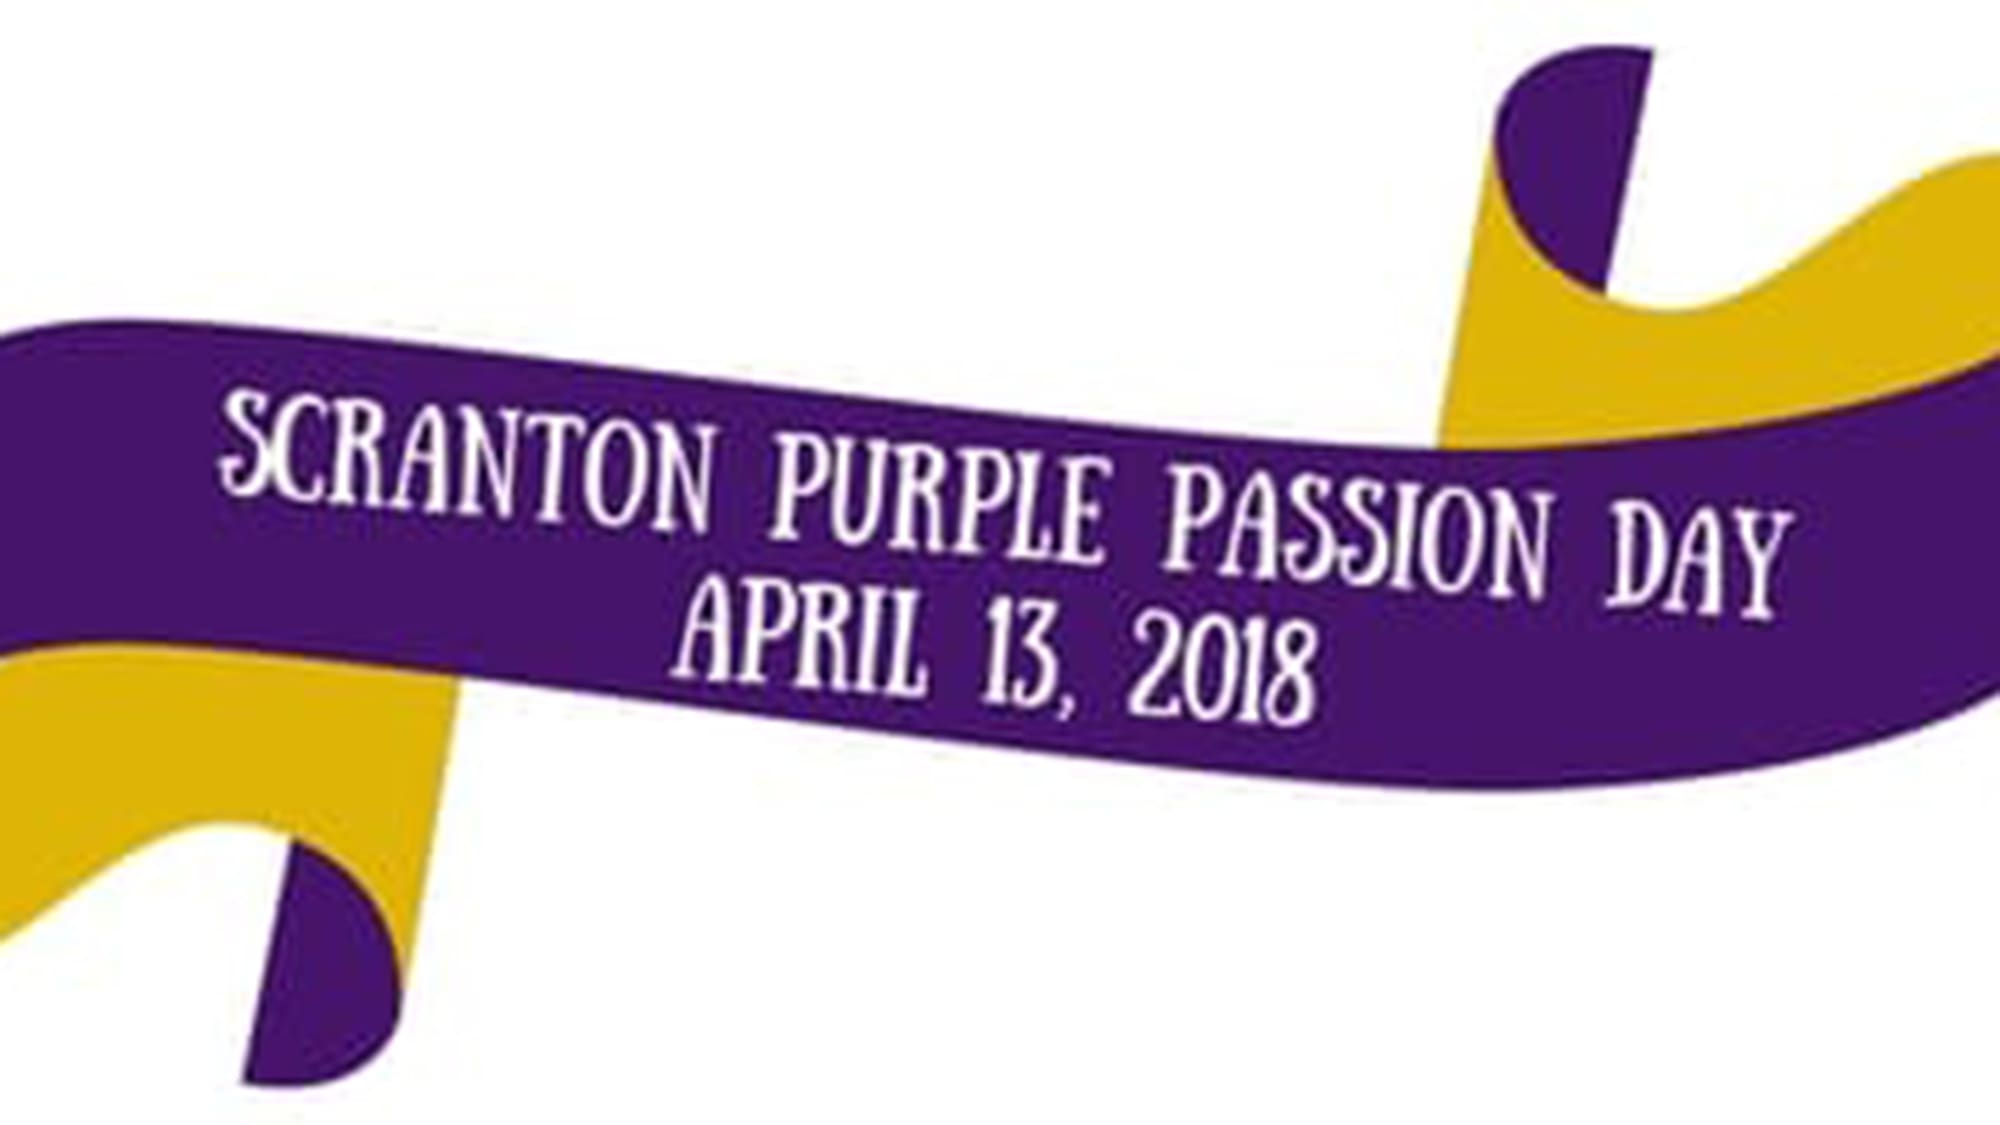 University To Hold Scranton Purple Passion Day April 13 image